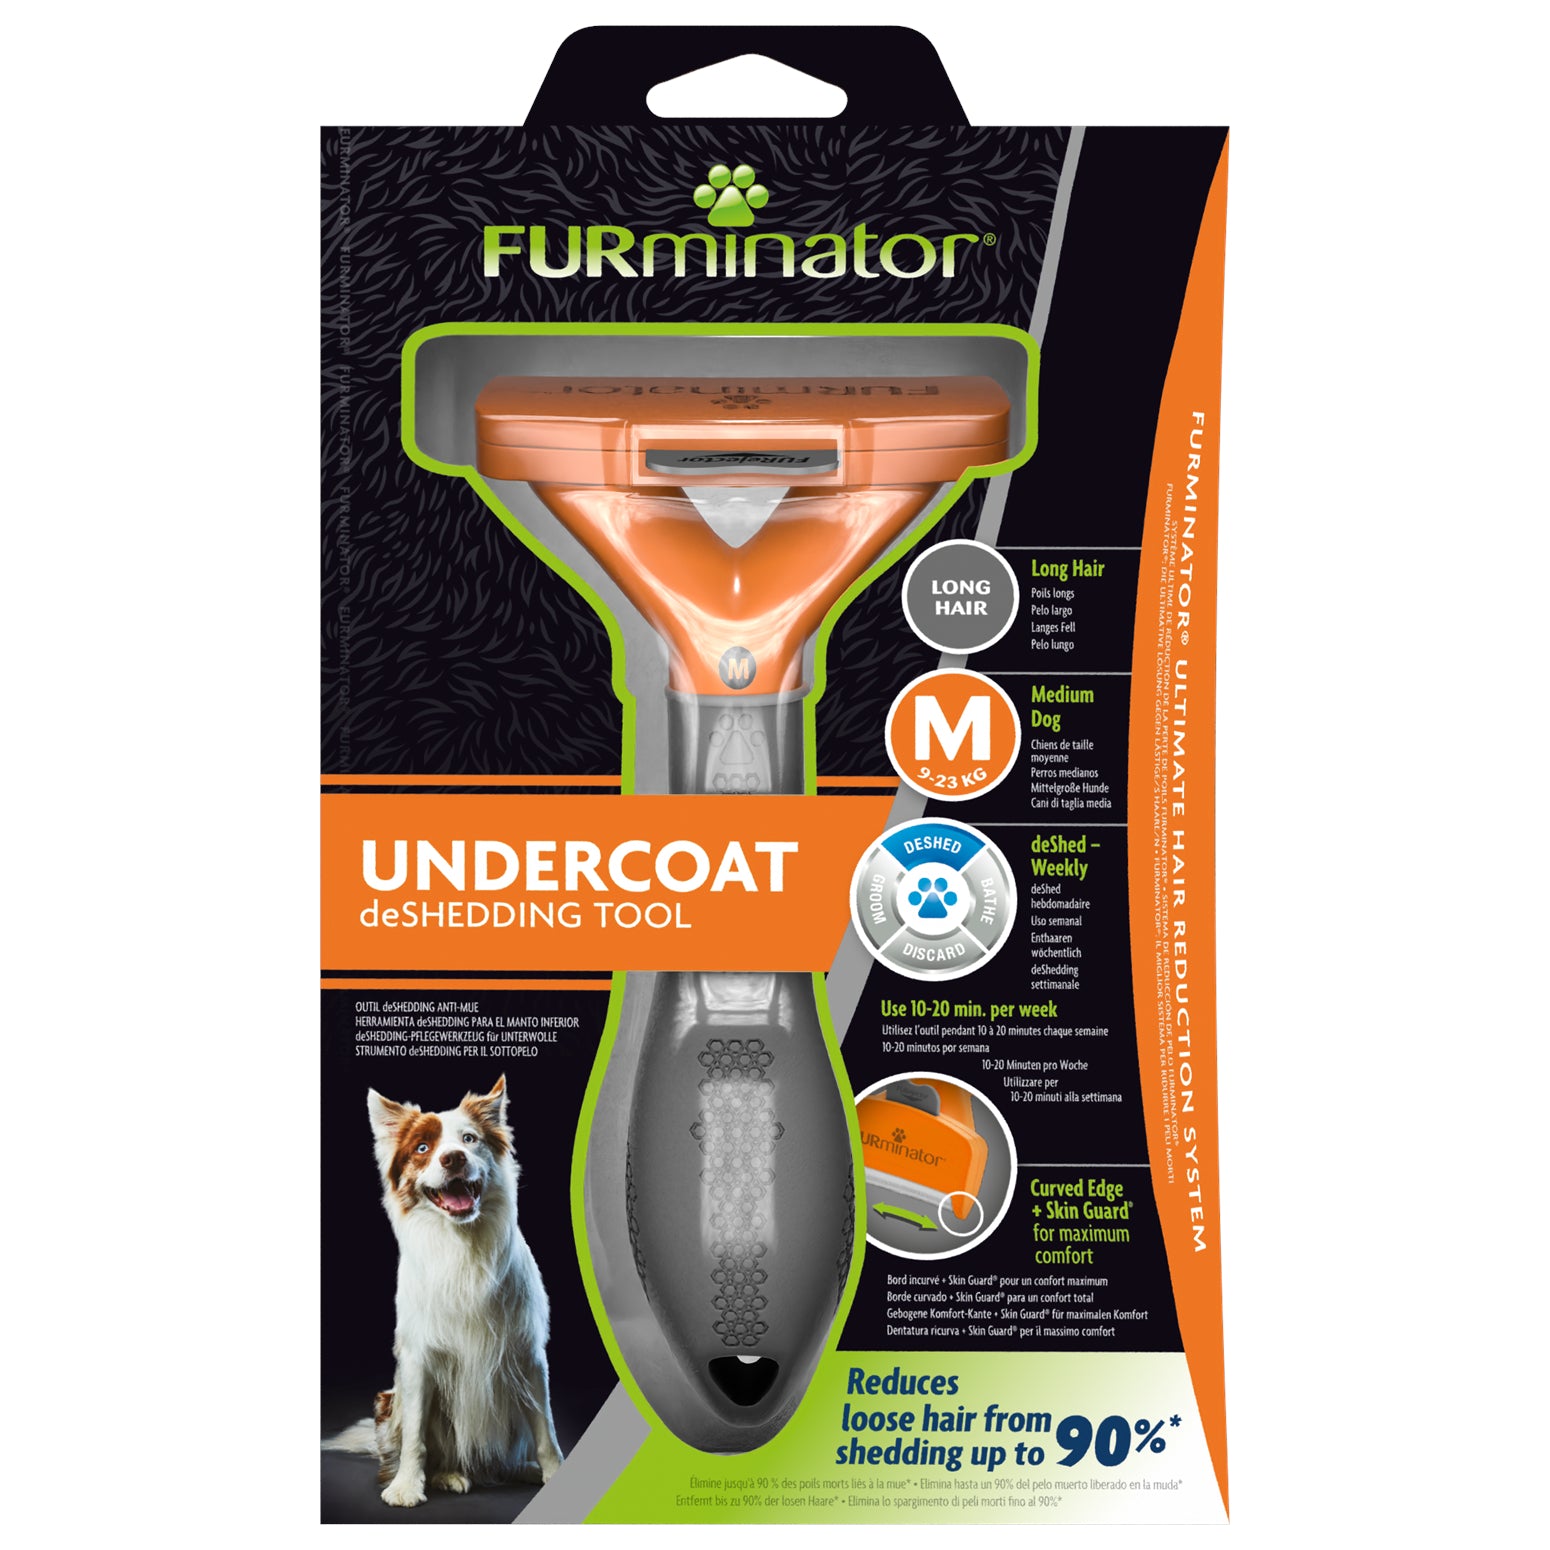 FURminator Undercoat deShedding Tools for Medium Dogs